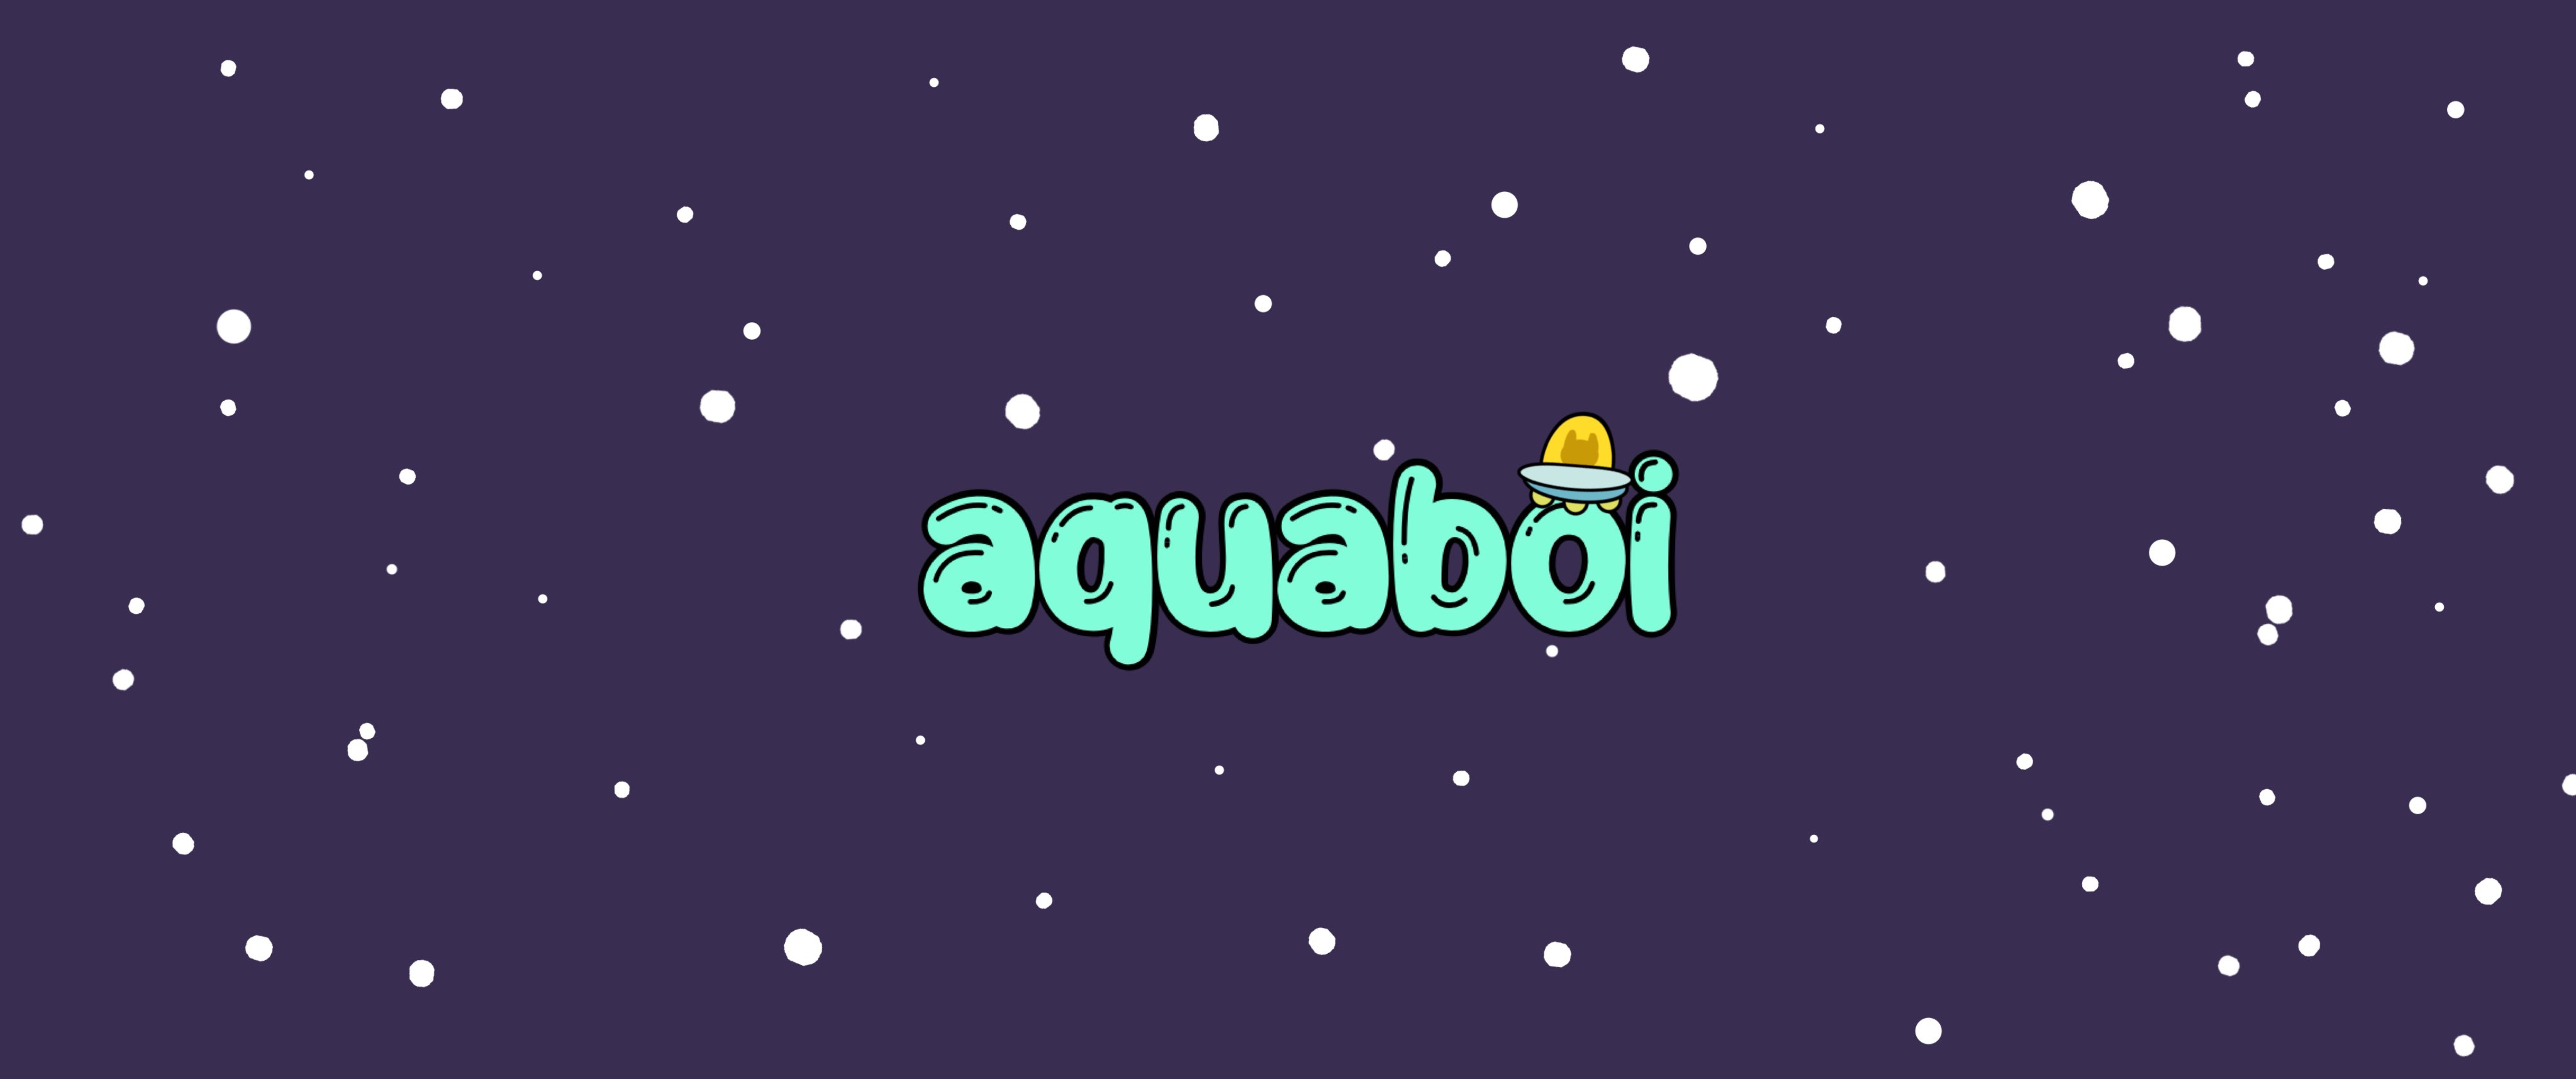 Aquaboi banner